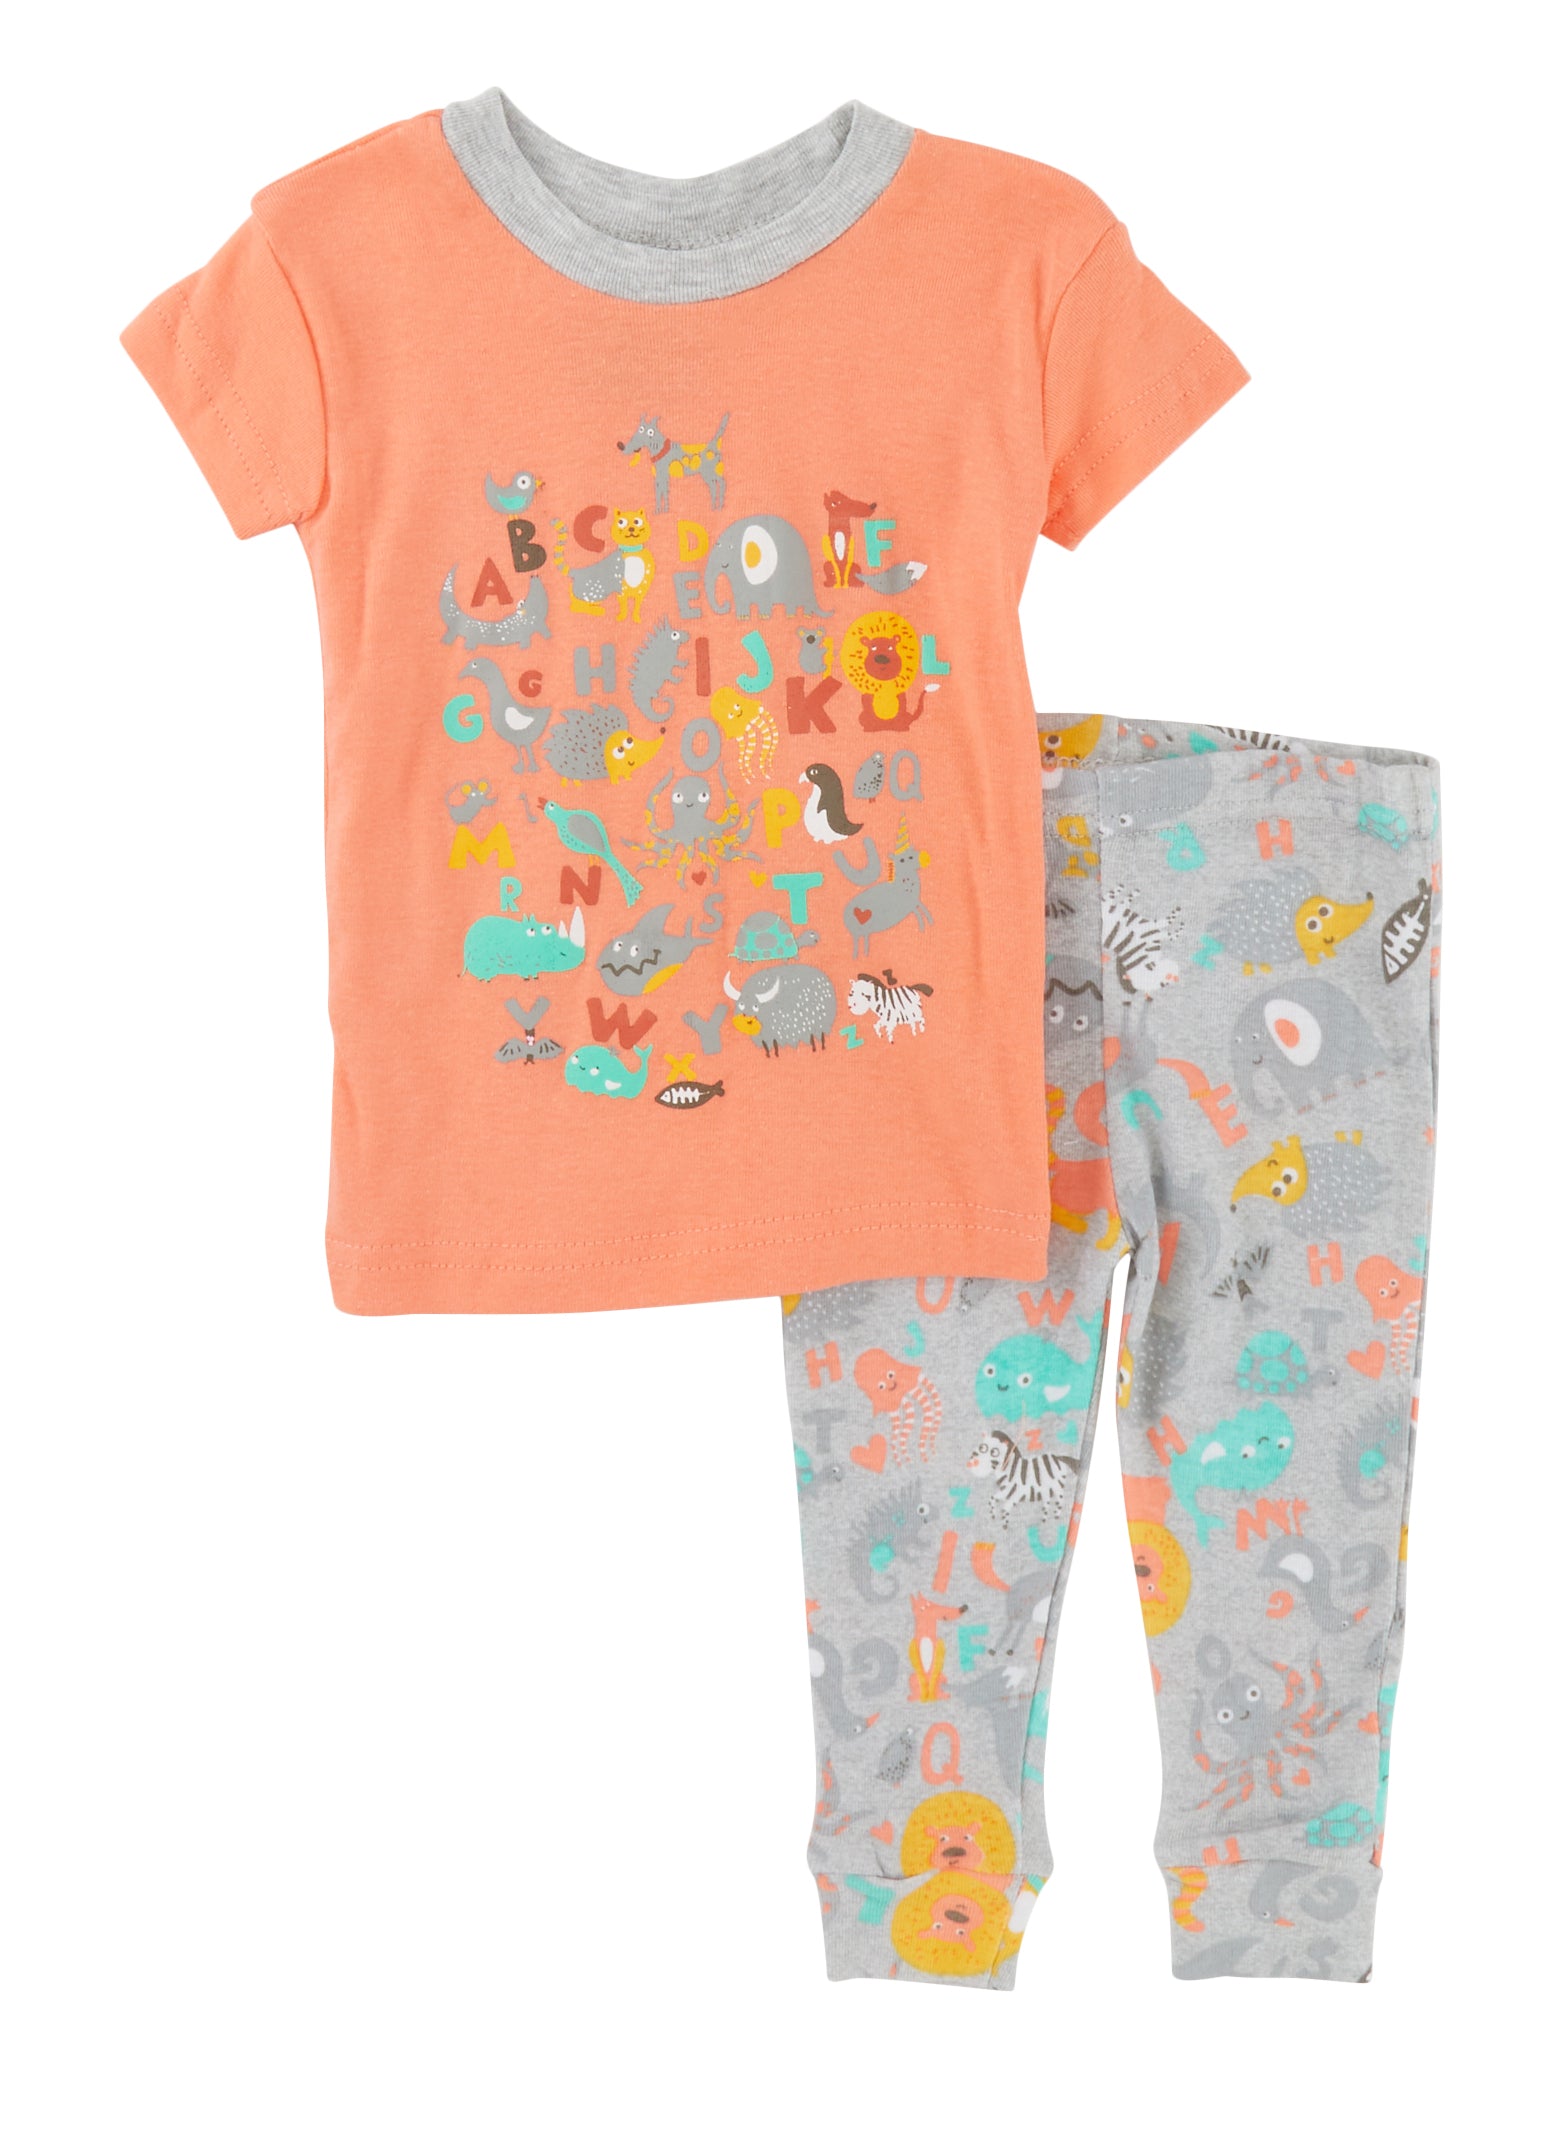 Baby Boys 12-24M Animal Graphic Print Pajama Tee and Pants Set, Orange, Size 12M